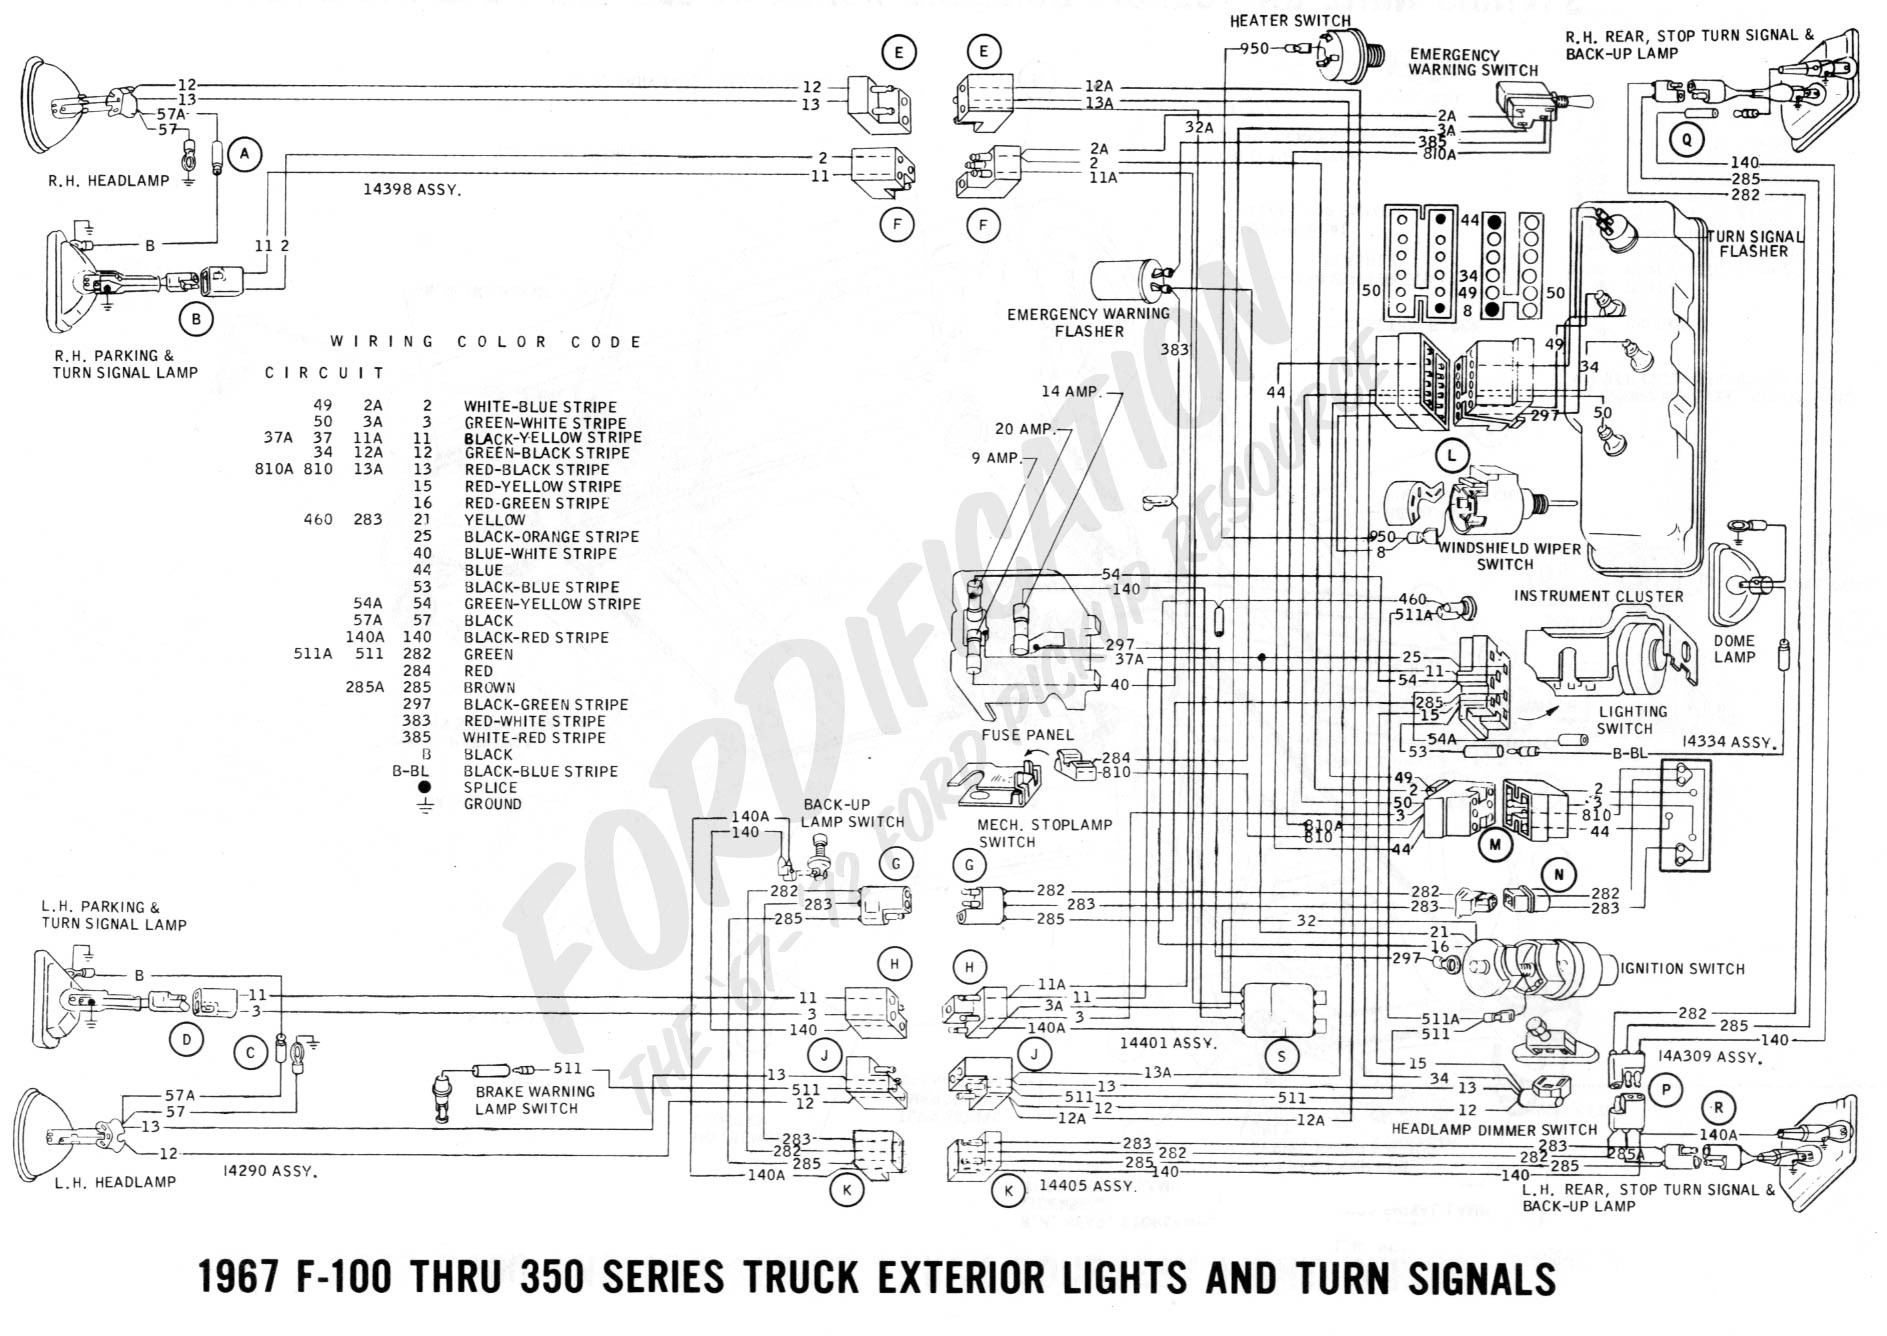 Alternator Wiring Diagram forums Print ford Truck Wiring Diagram Ford F150 Wiring Diagrams Best Volvo